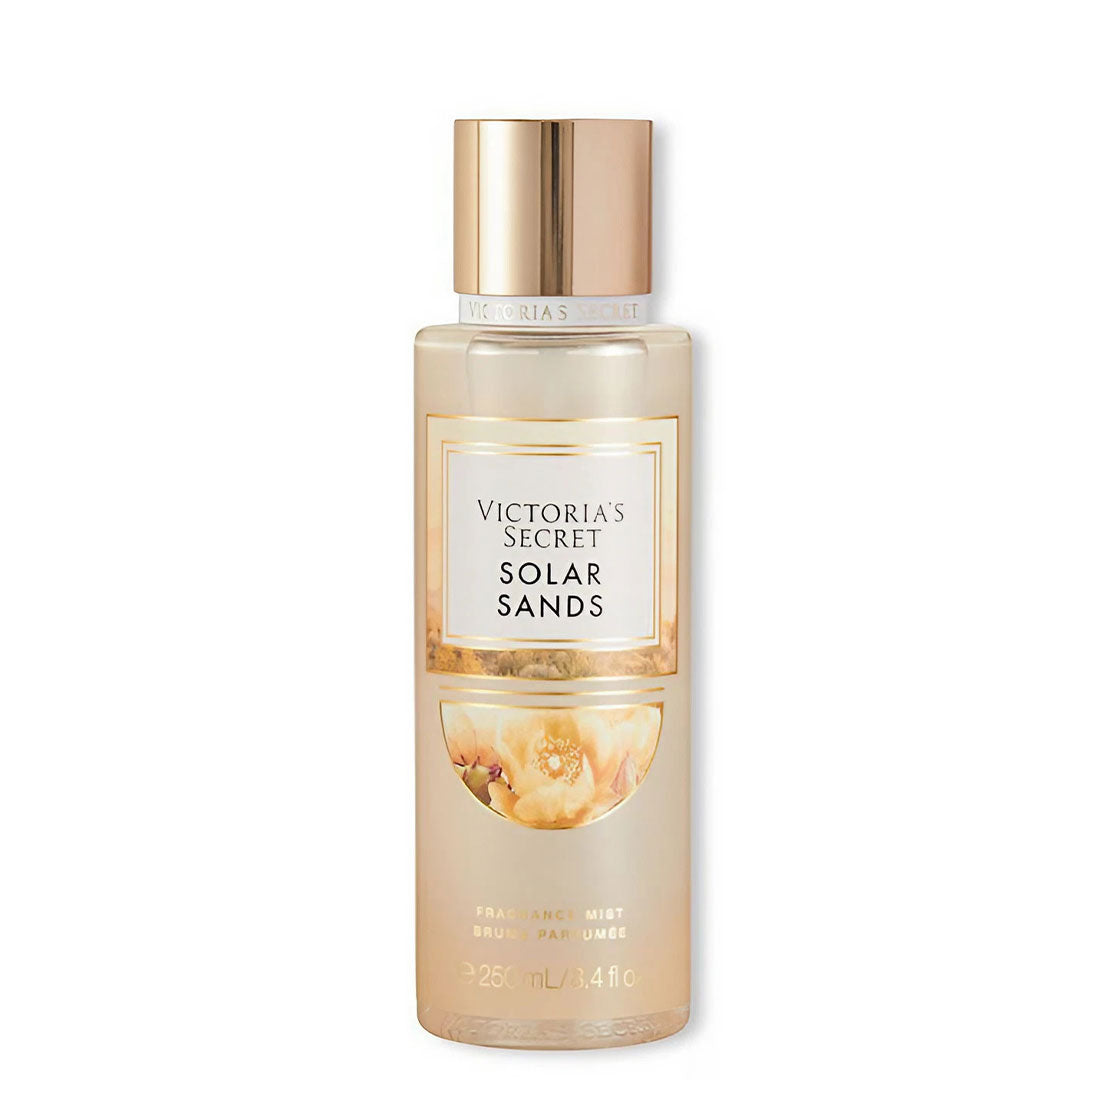 Parfums Solar Sands de la marque Victoria's Secret mixte 